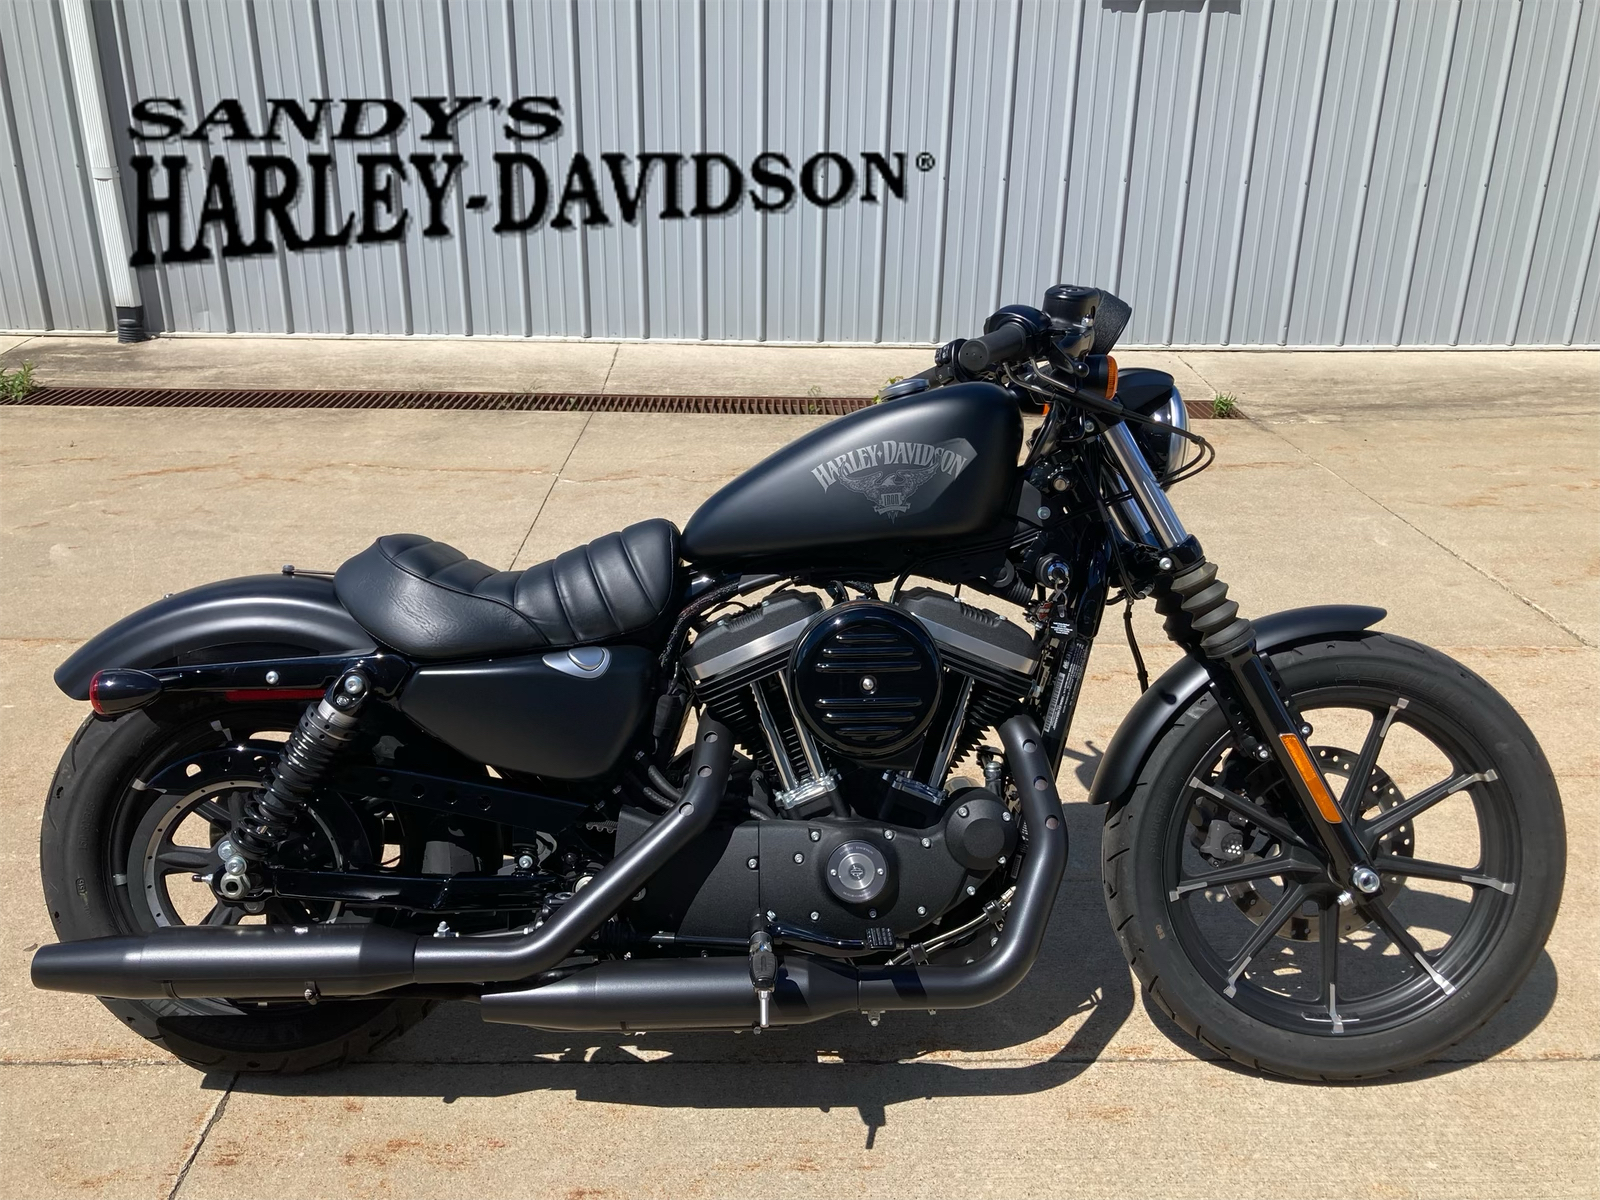 2016 Harley-Davidson Iron 883™ in Fremont, Michigan - Photo 1